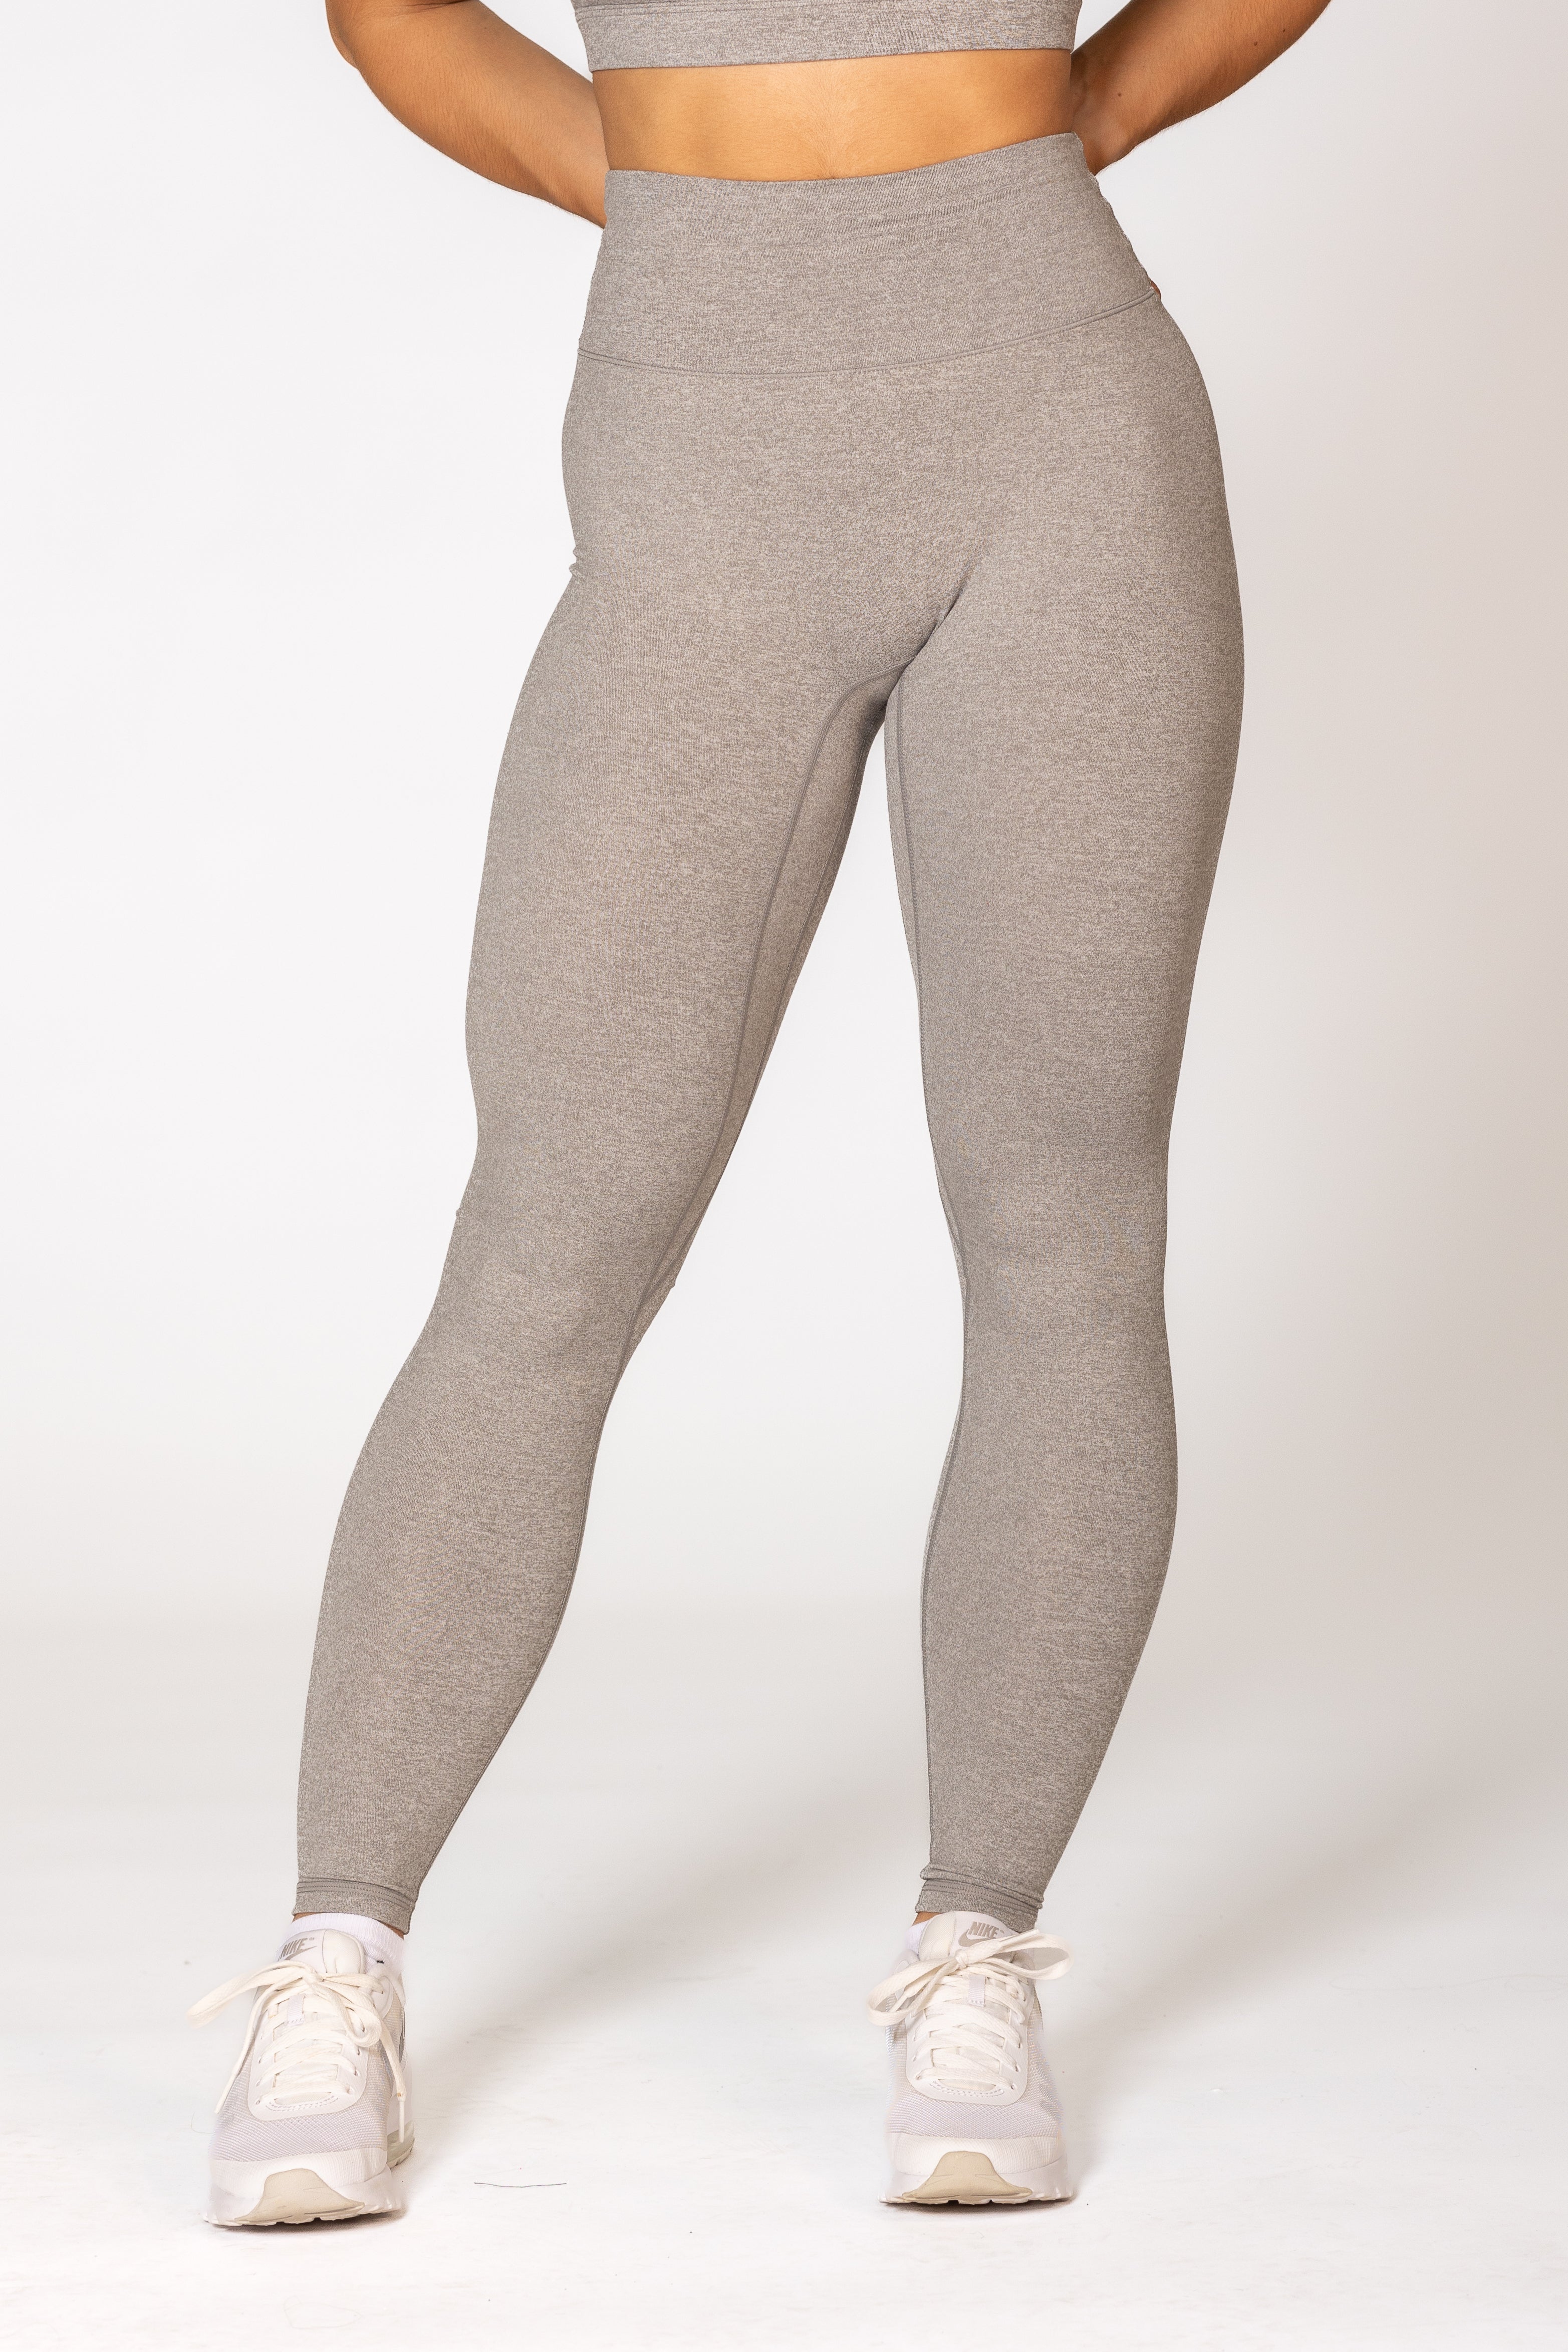 Bare Pro Short : 6  Squat proof leggings, S models, Low impact